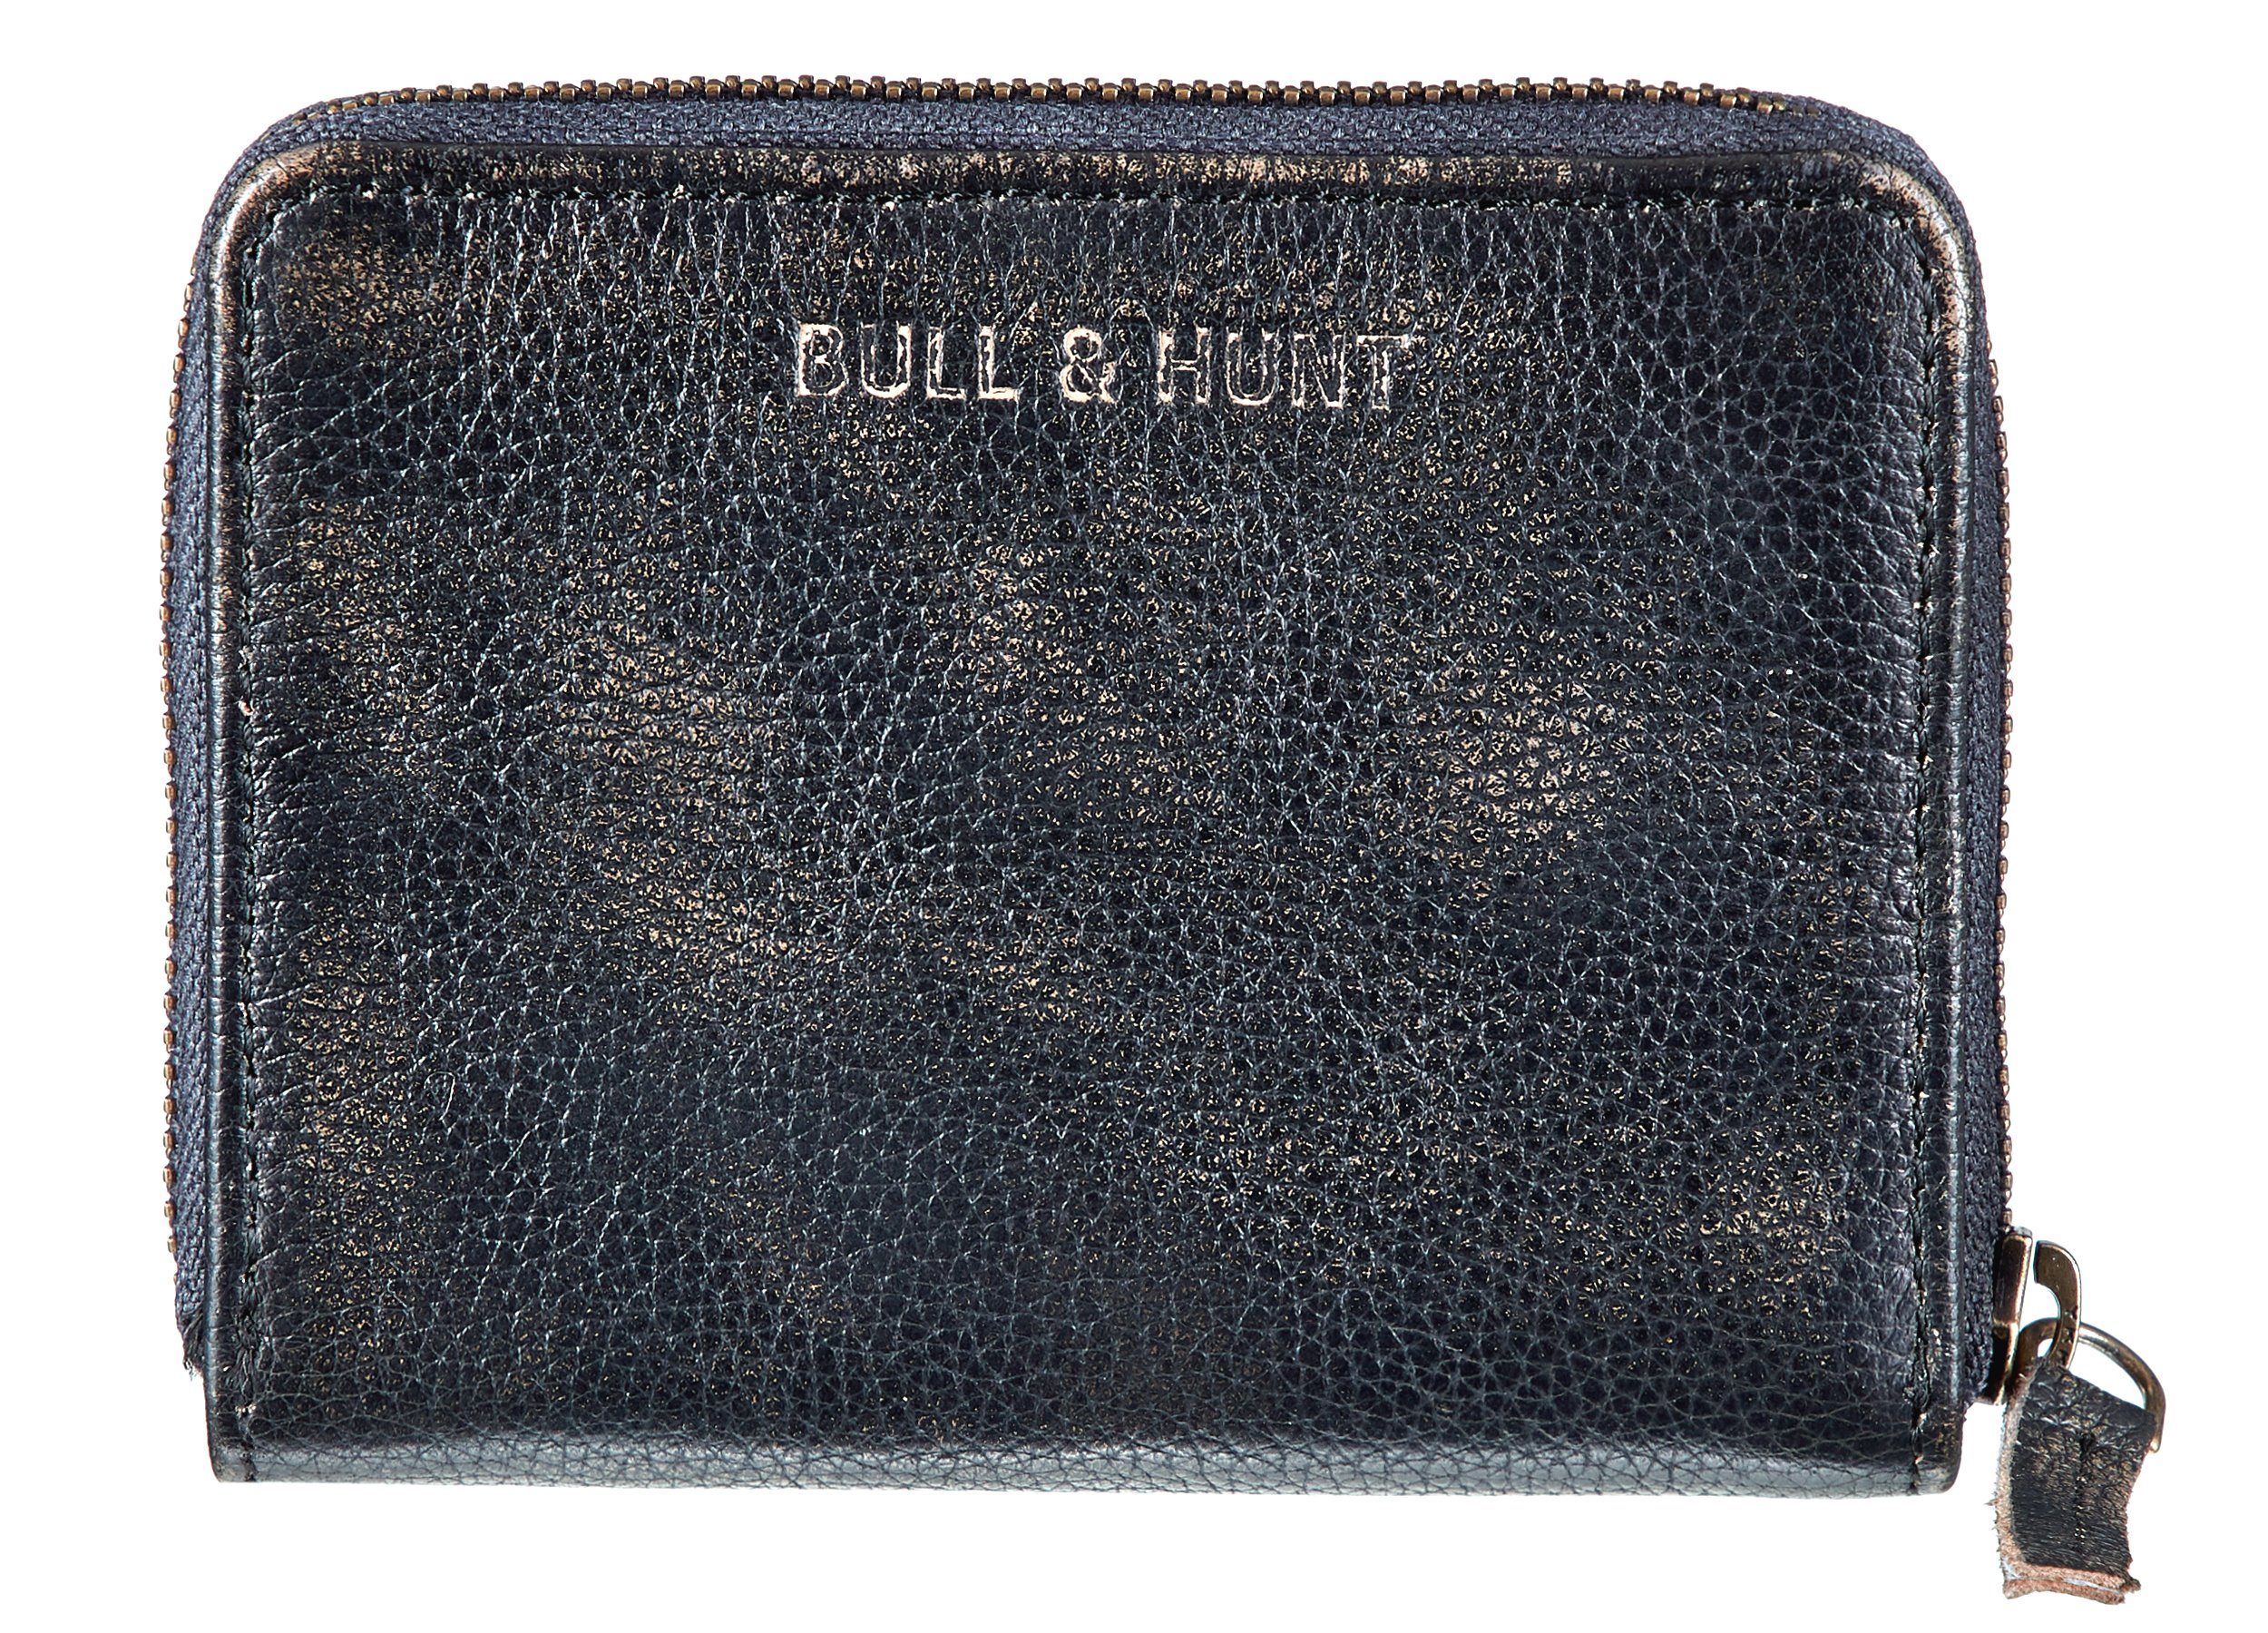 Bull & Hunt Geldbörse midi black distressed zip wallet